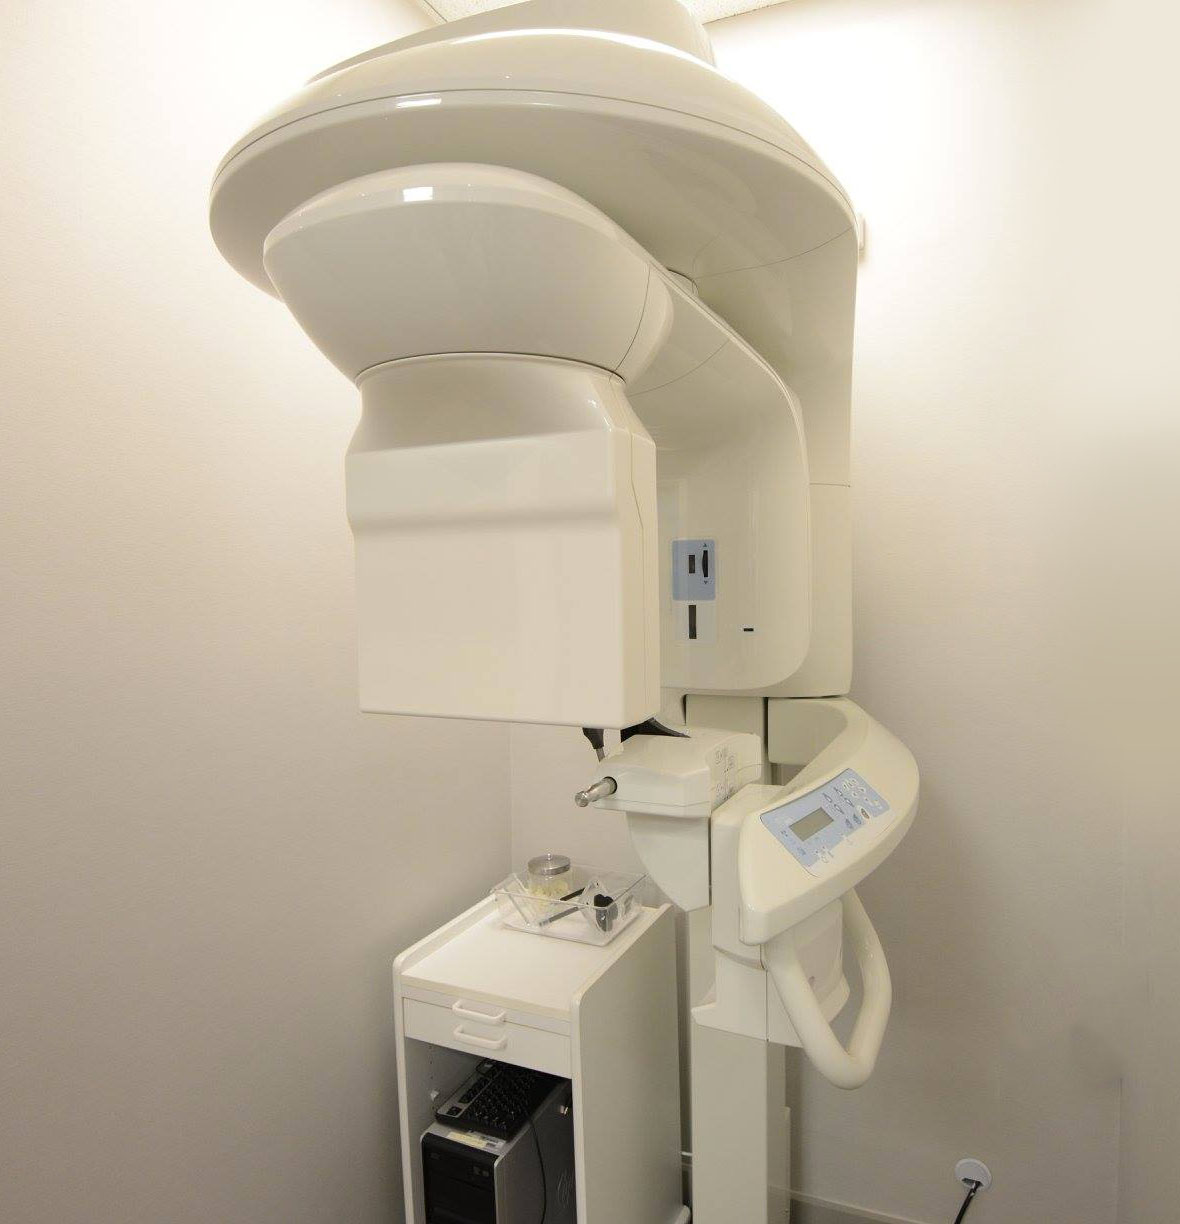 3D CT Scan & Digital Panorex